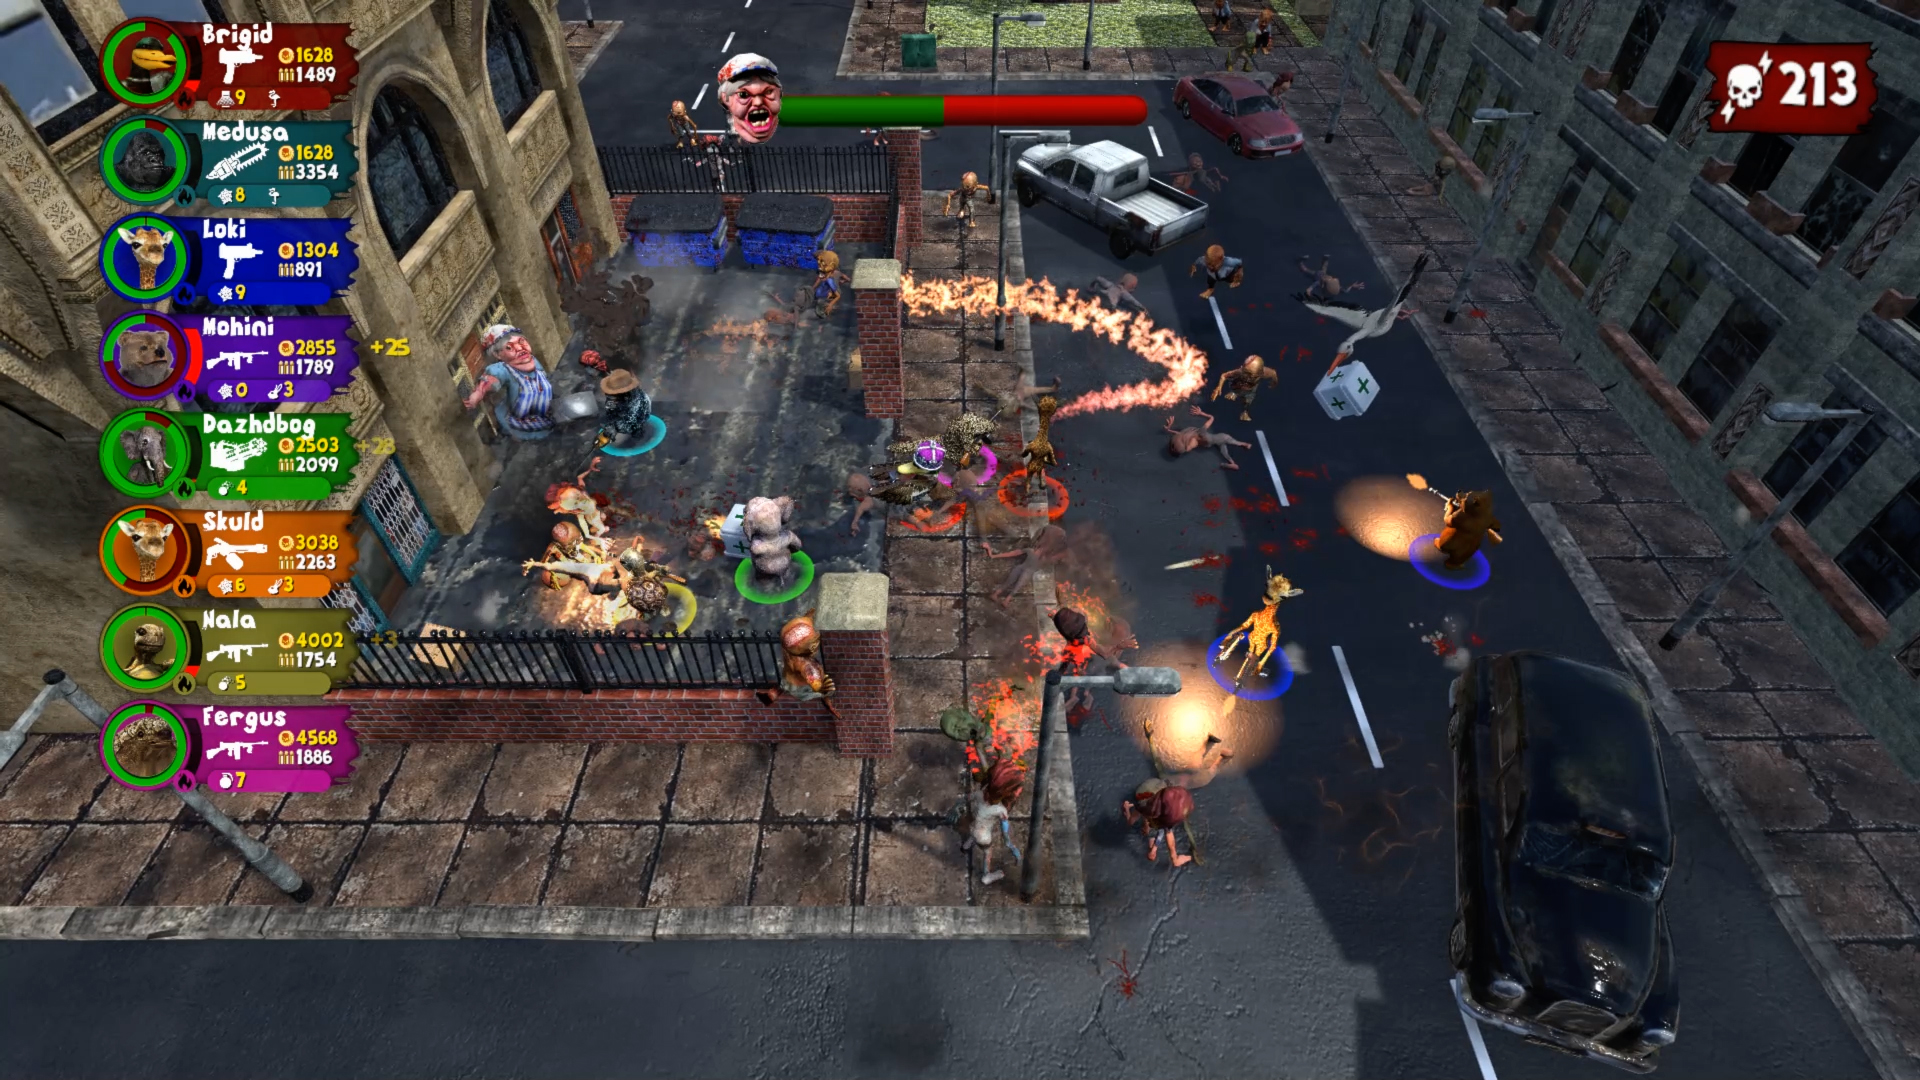 Nature's Zombie Apocalypse Online Multiplayer Trailer